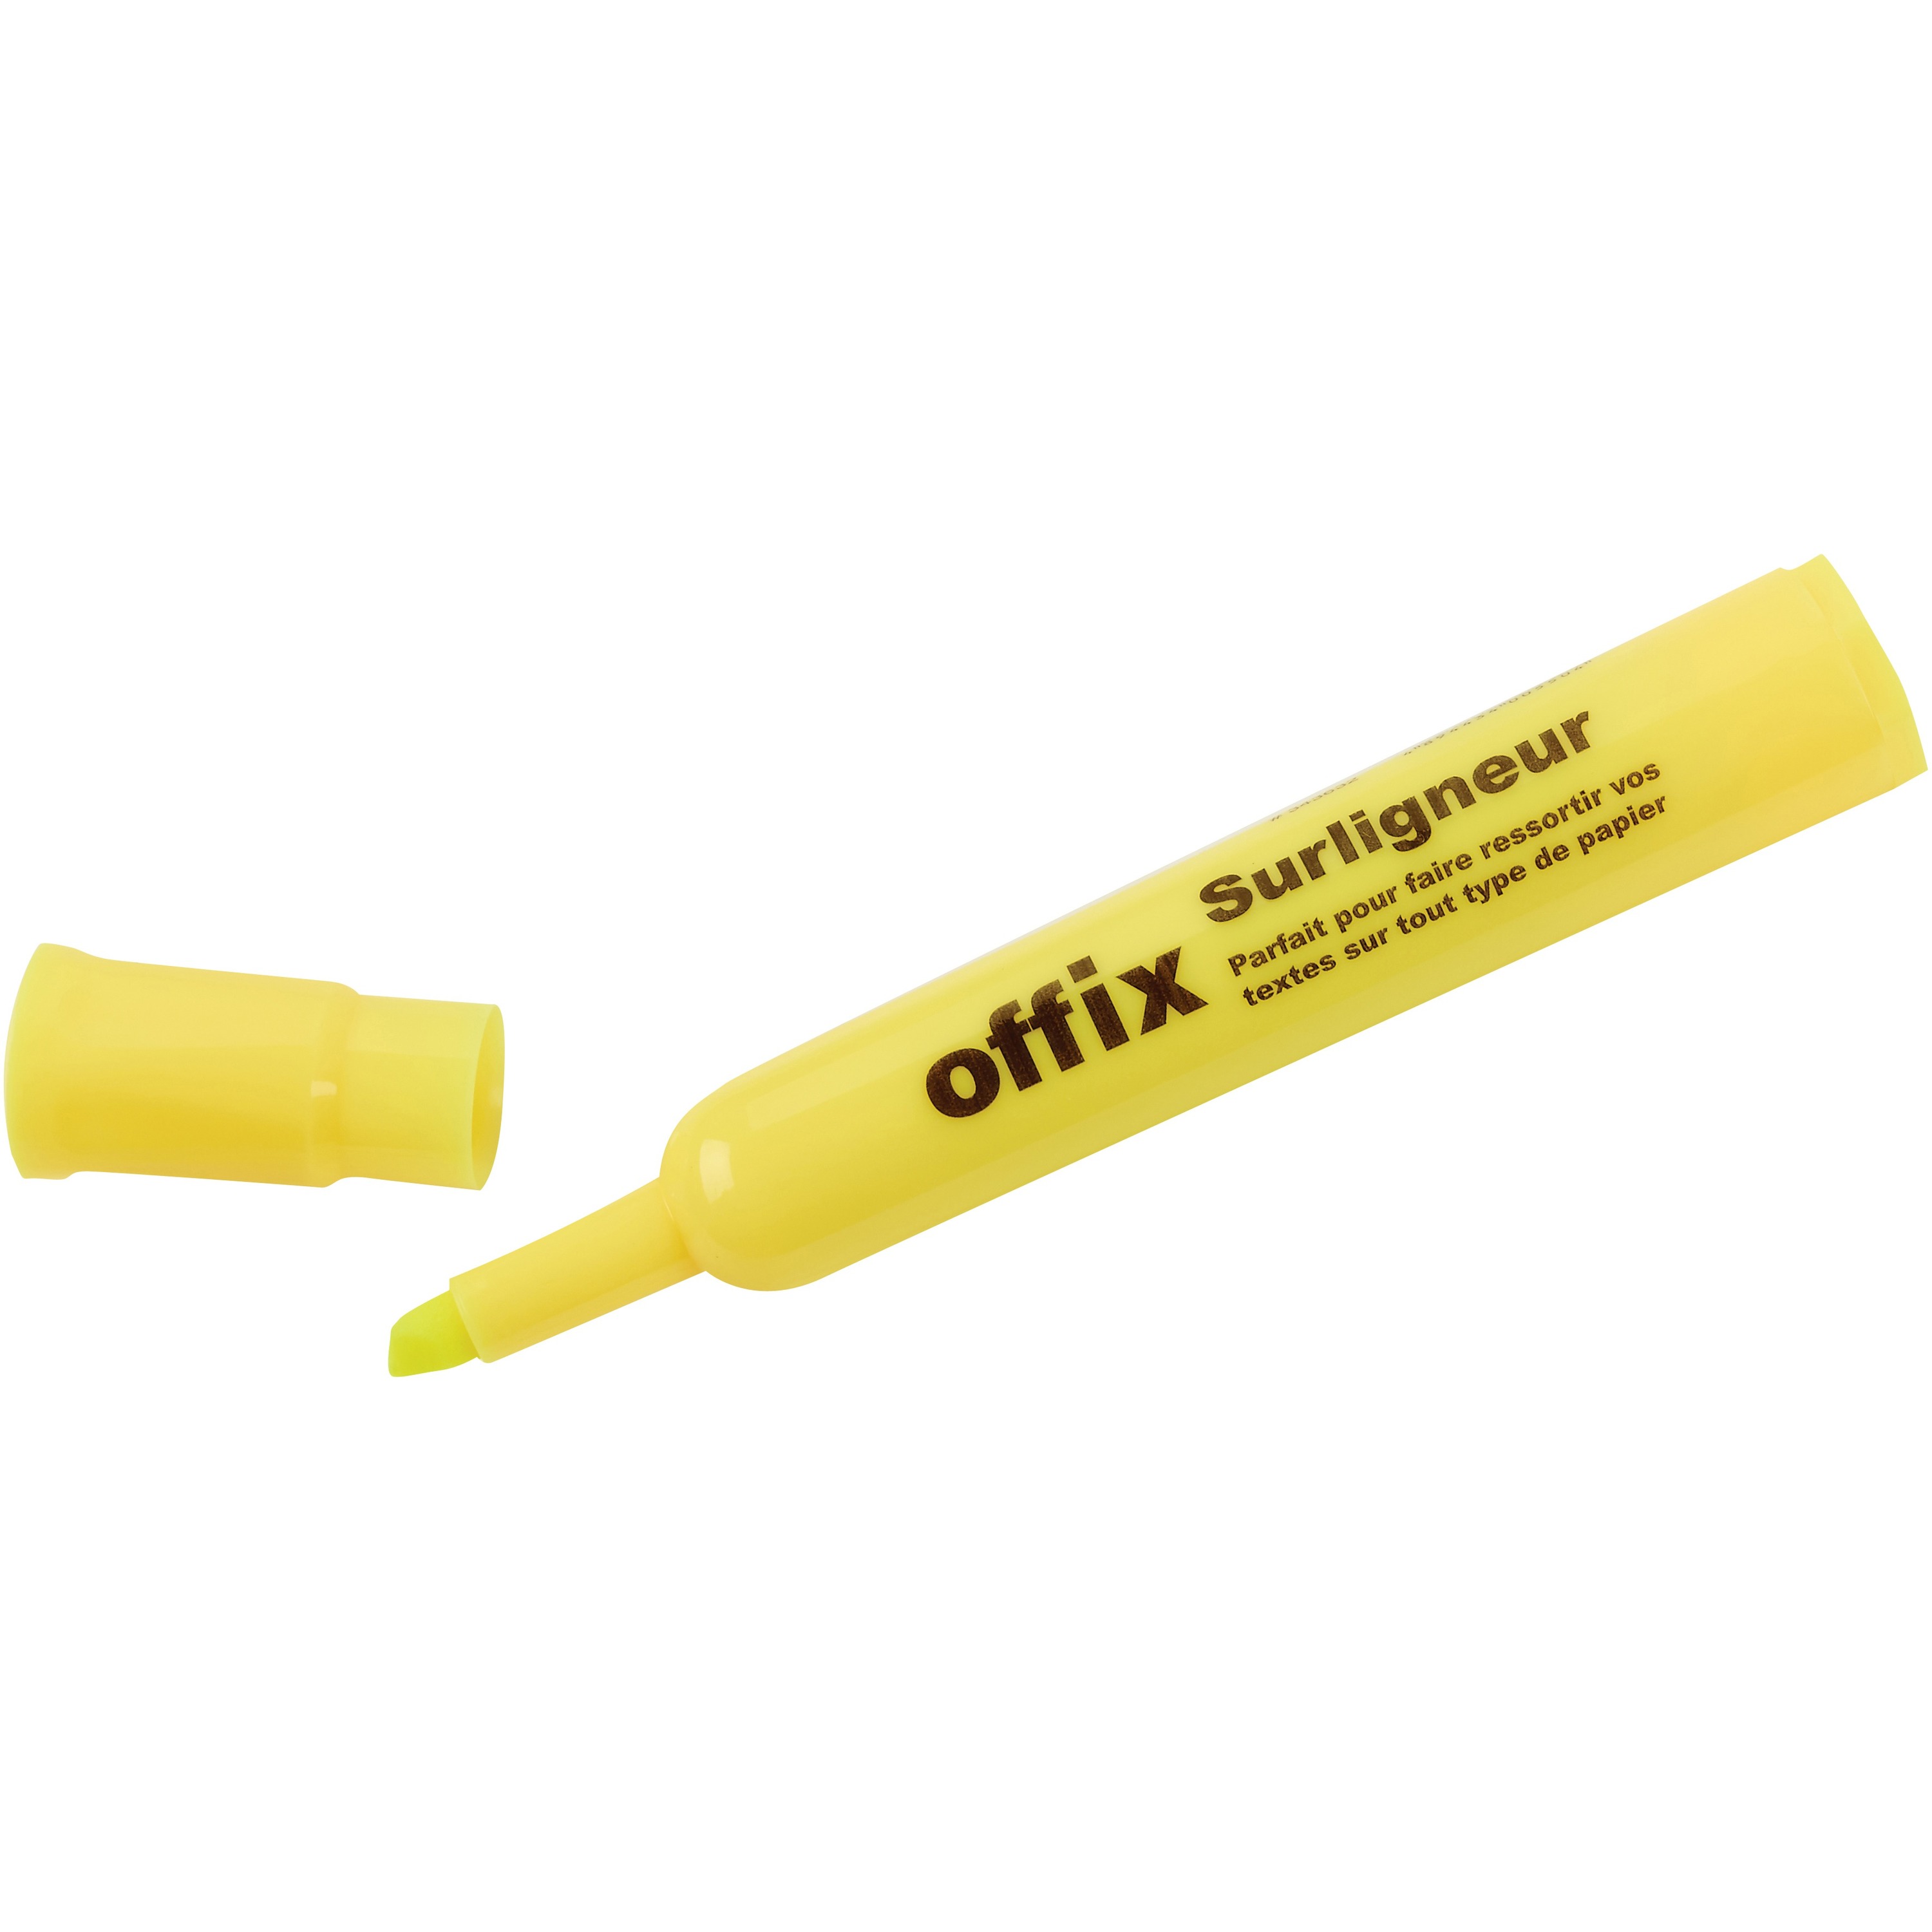 Offix Highlighter - Chisel Marker Point Style - Yellow - 1 Dozen